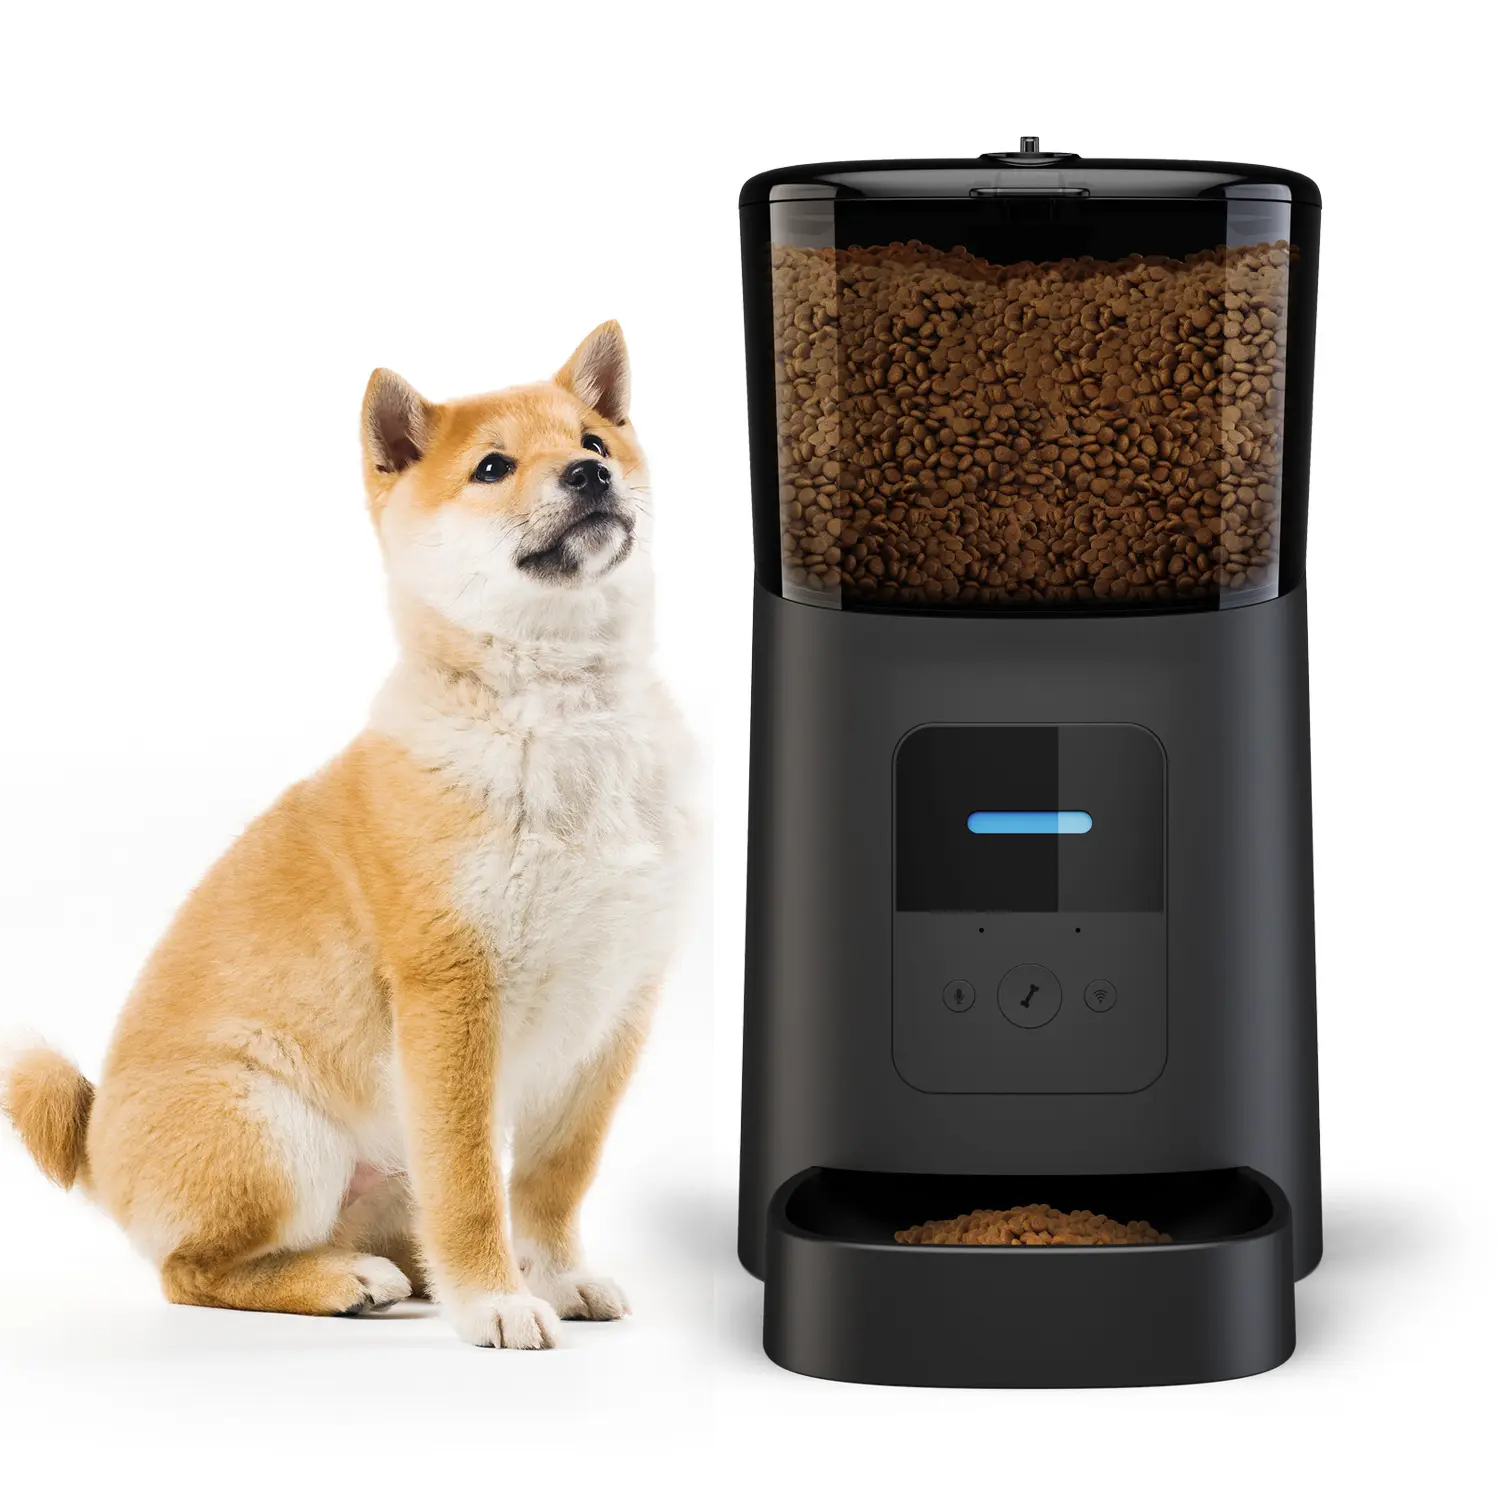 Lahvo pet feeder Smart Pet Feeder wifi App pet smart feeder dog cat food